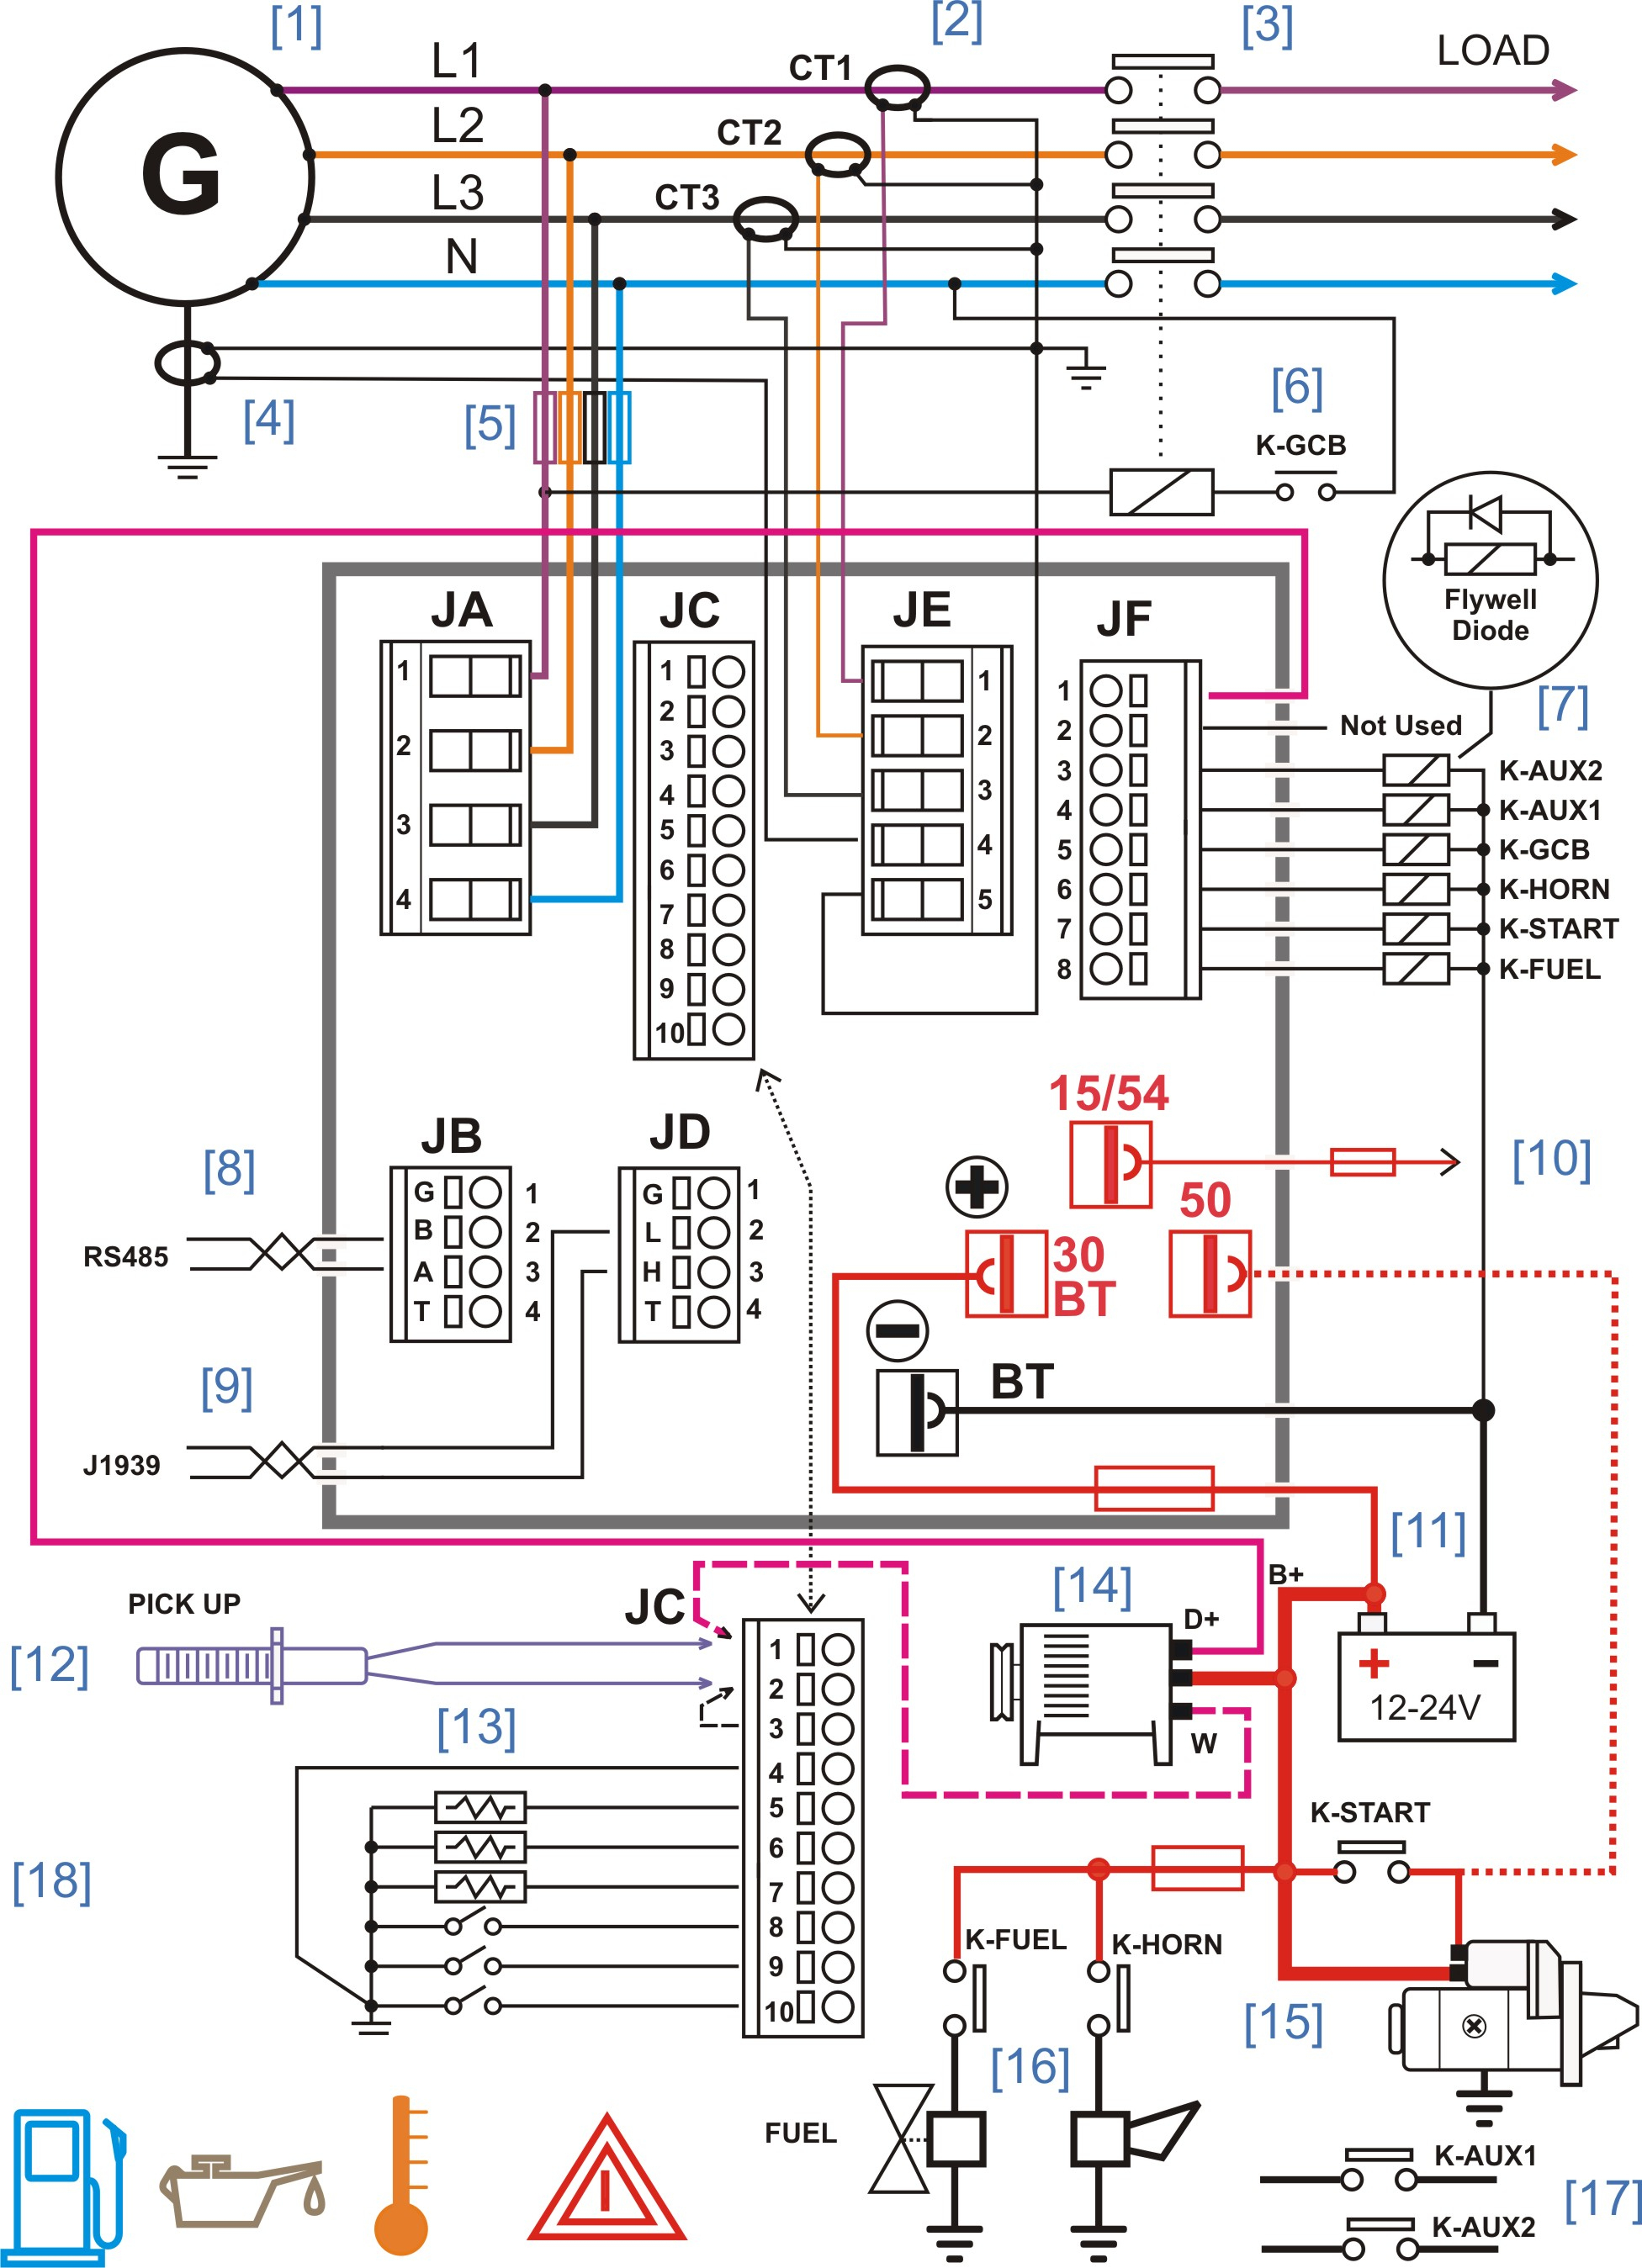 Wiring Diagram Maker | Wiring Diagram - Wiring Diagram Software